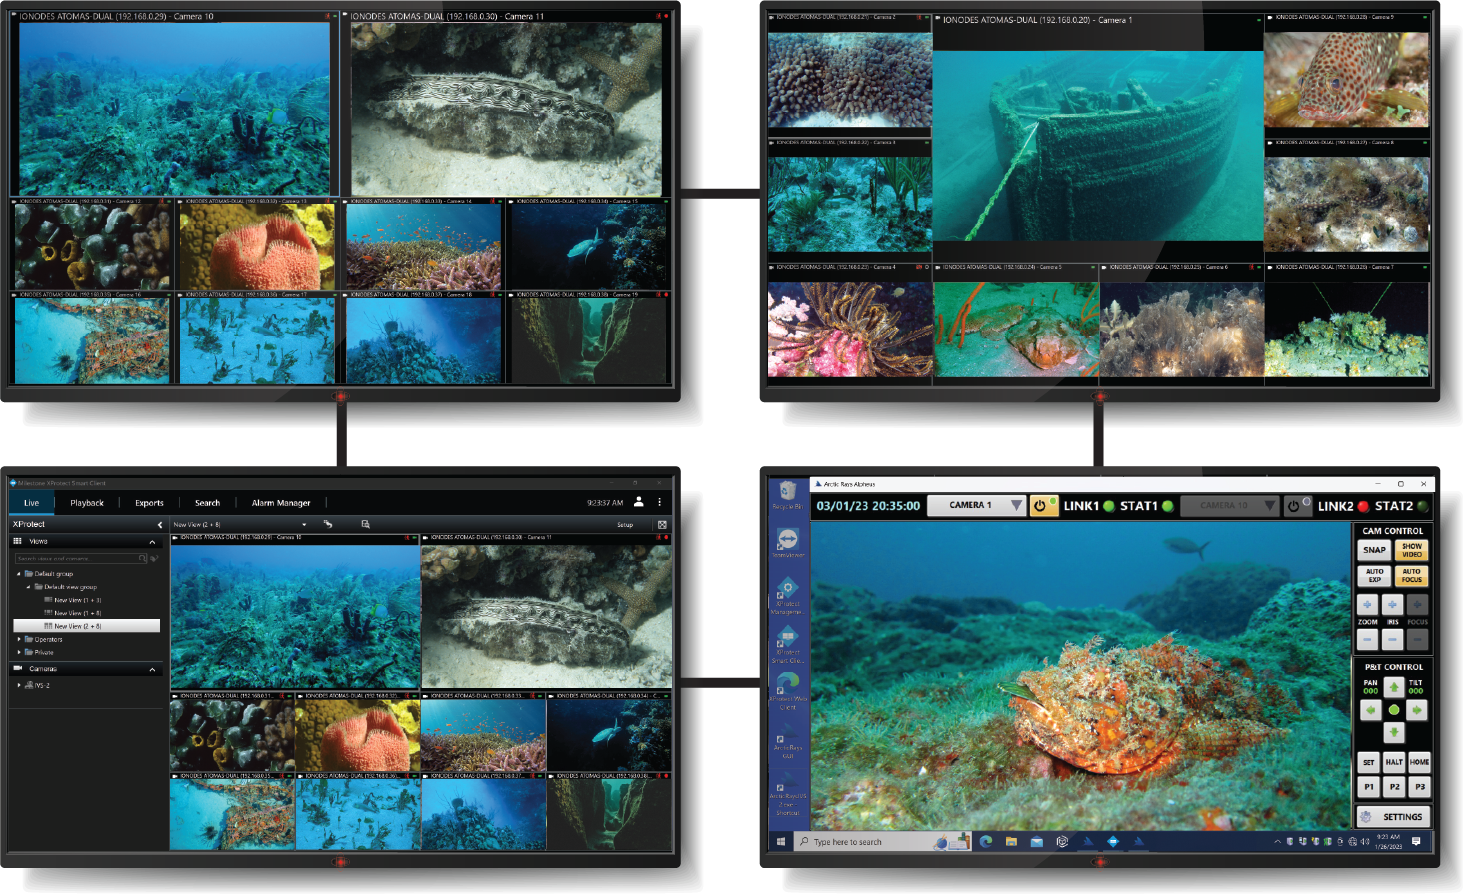 Video management system of the Alpheus Subsea Surveillance System